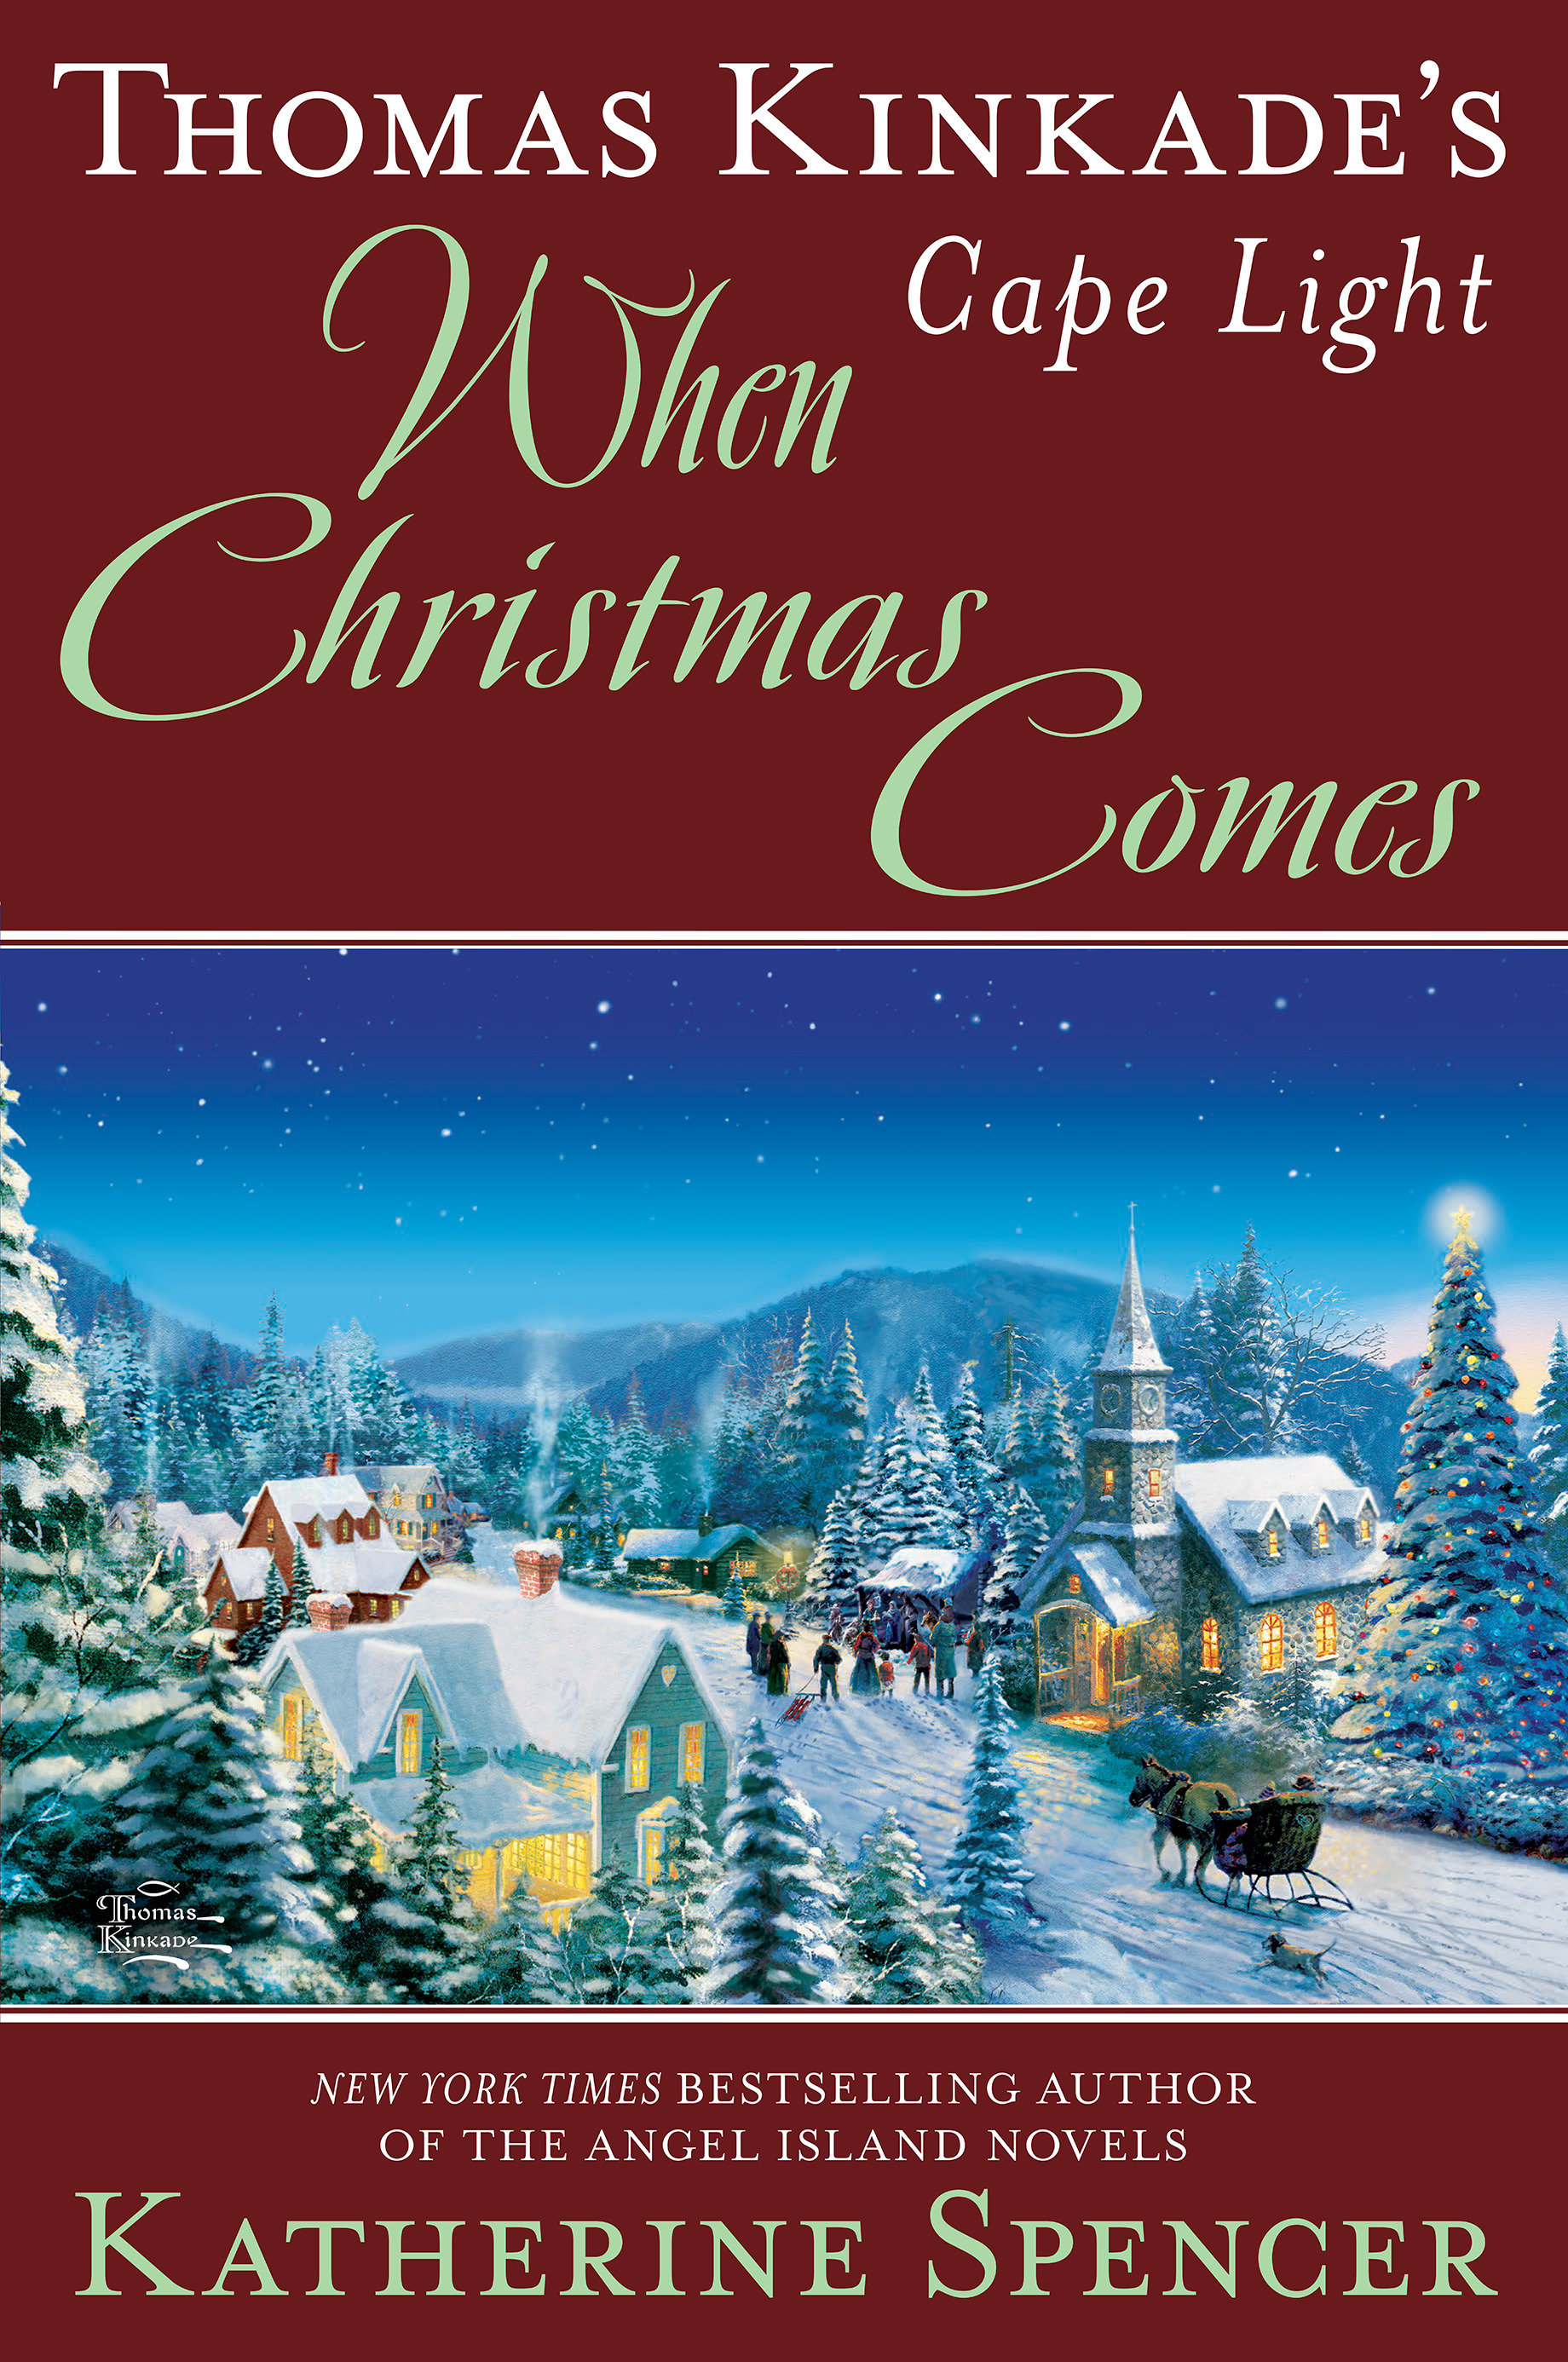 Thomas Kinkade'S Cape Light: When Christmas Comes (Hardcover Book)